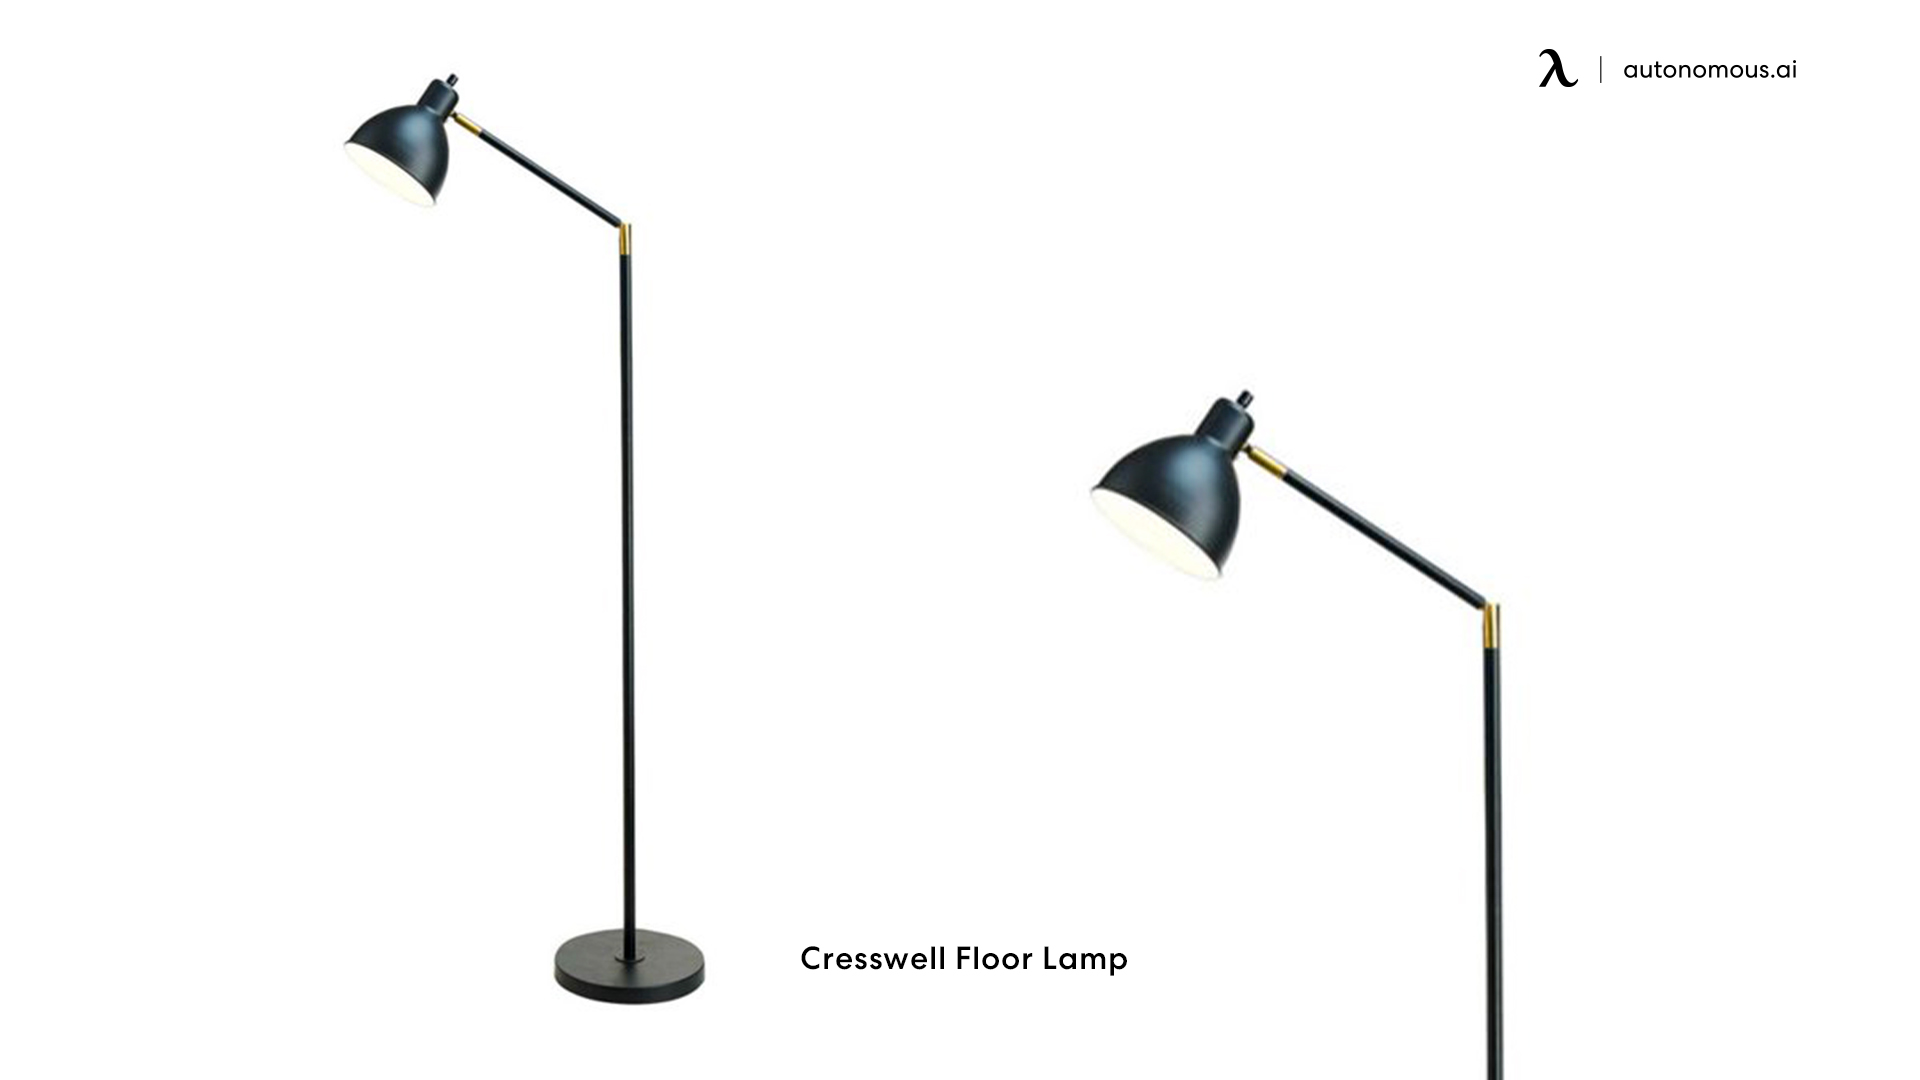 Cresswell Office floor lamp